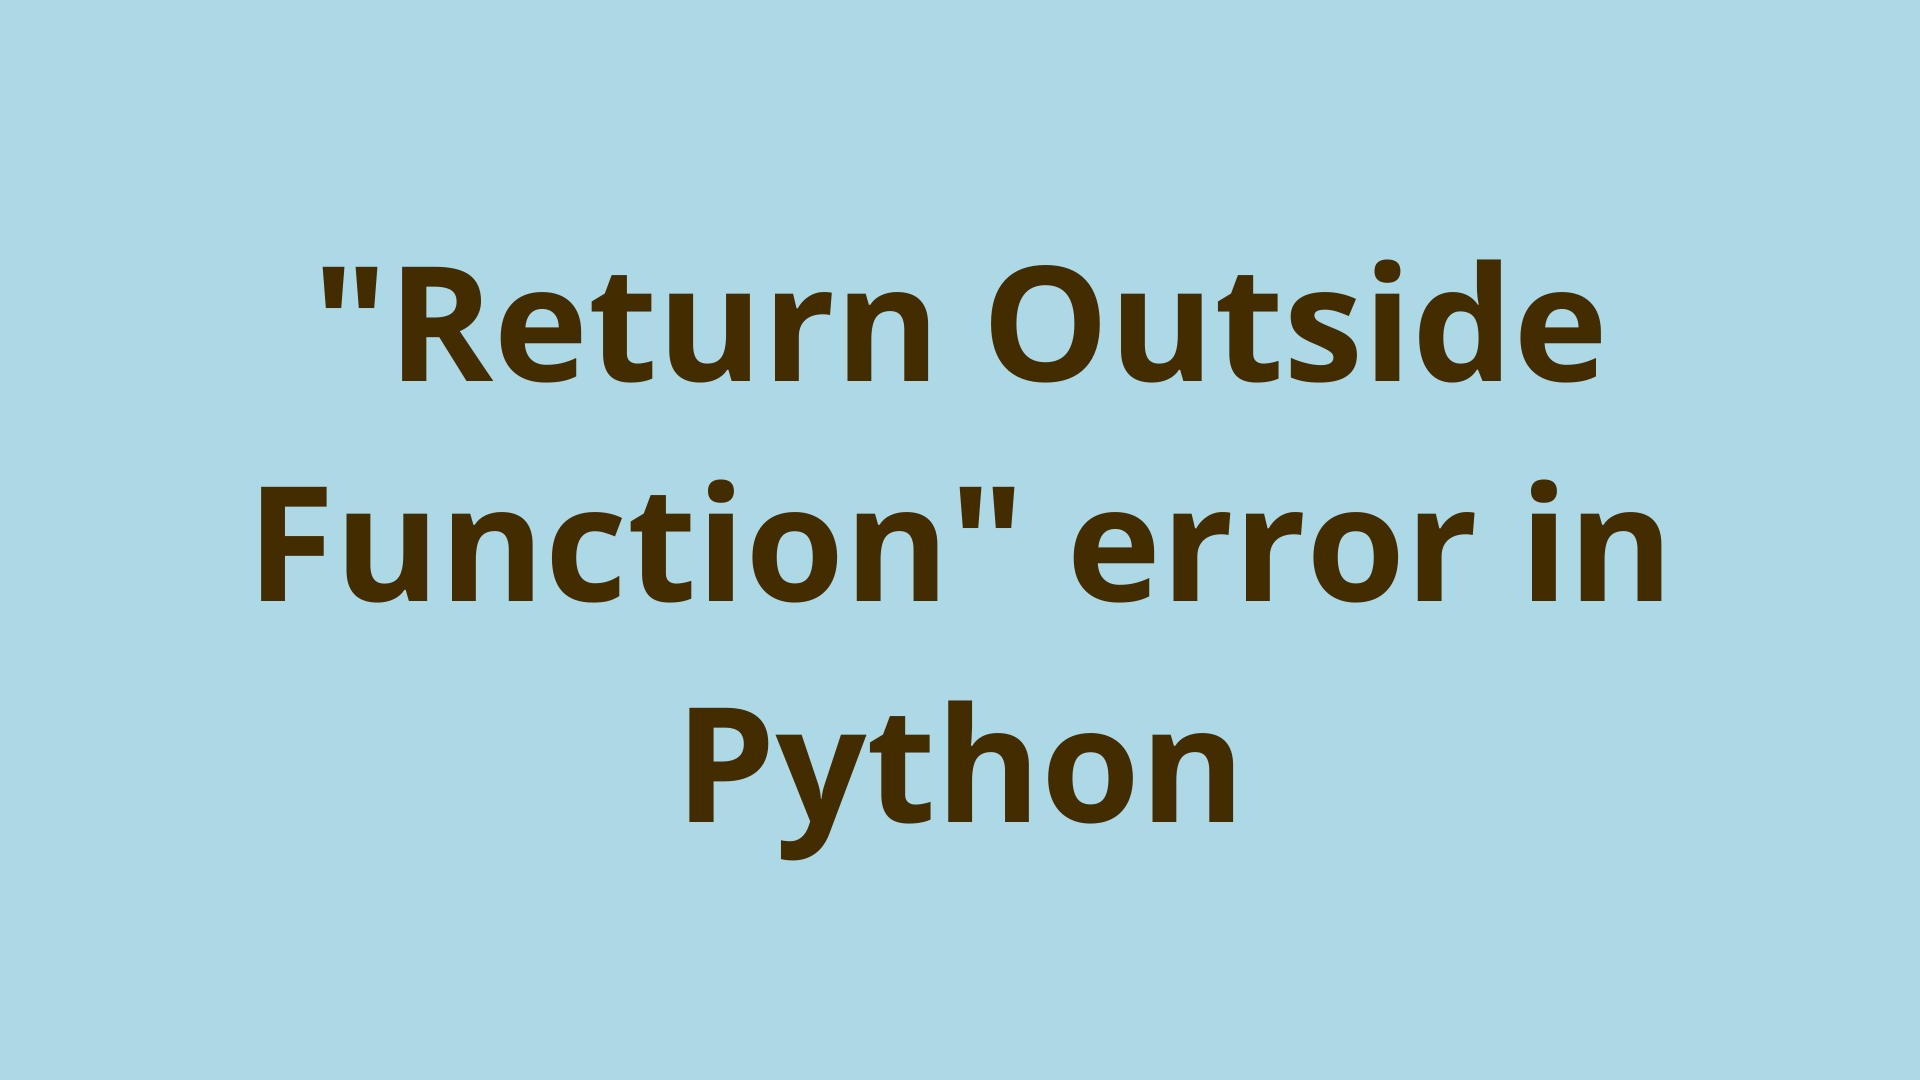 Image of Return Outside Function error in Python